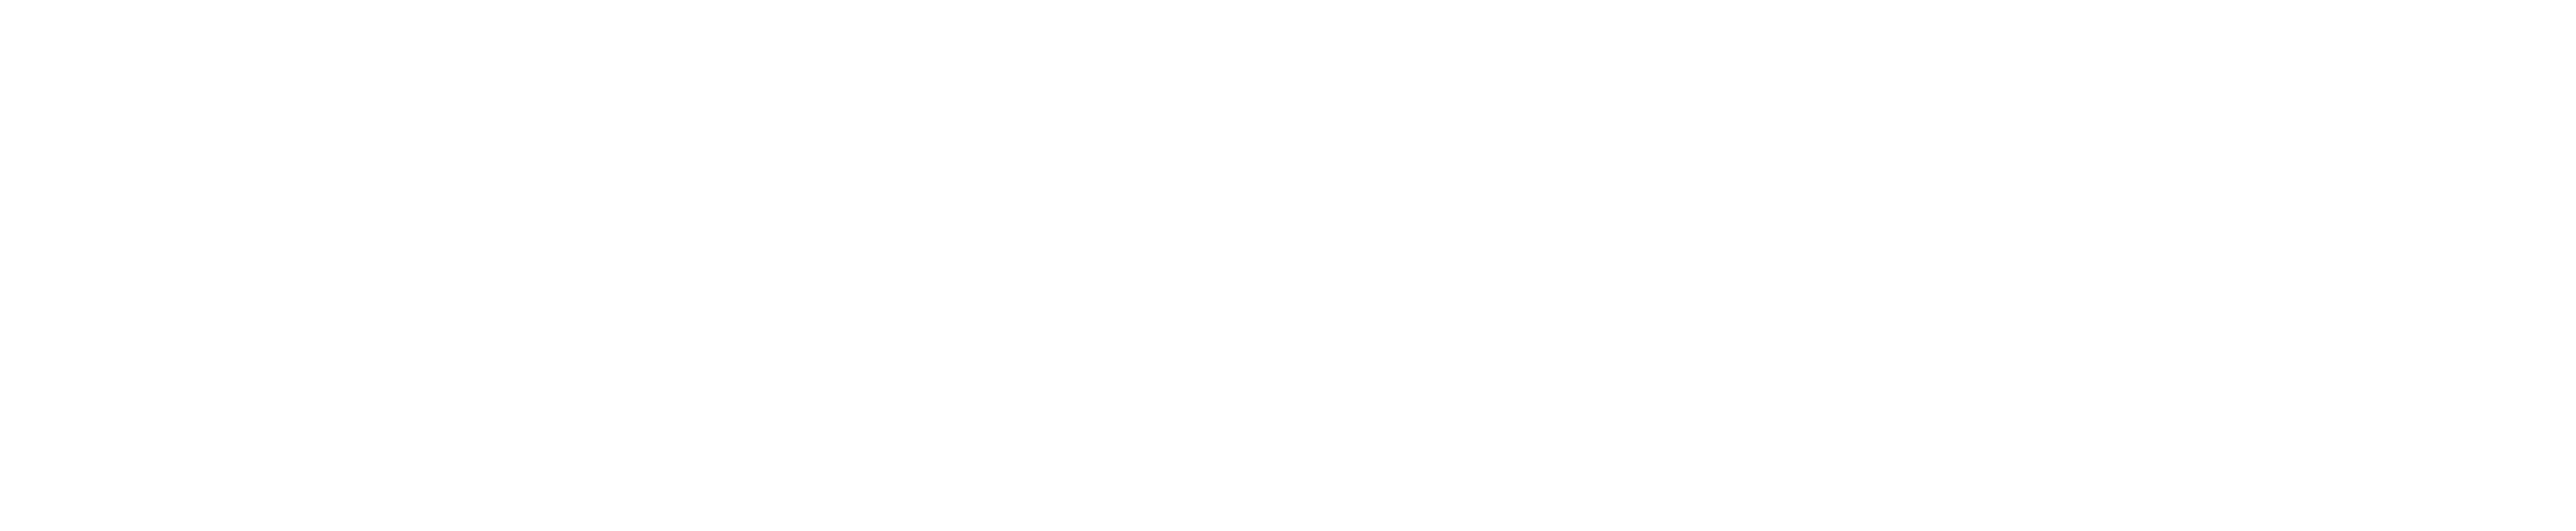 logo-financiado-por-la-union-europea-logo-plan-de-recuperacion-transformacion-resiliencia-descripcion-blanco